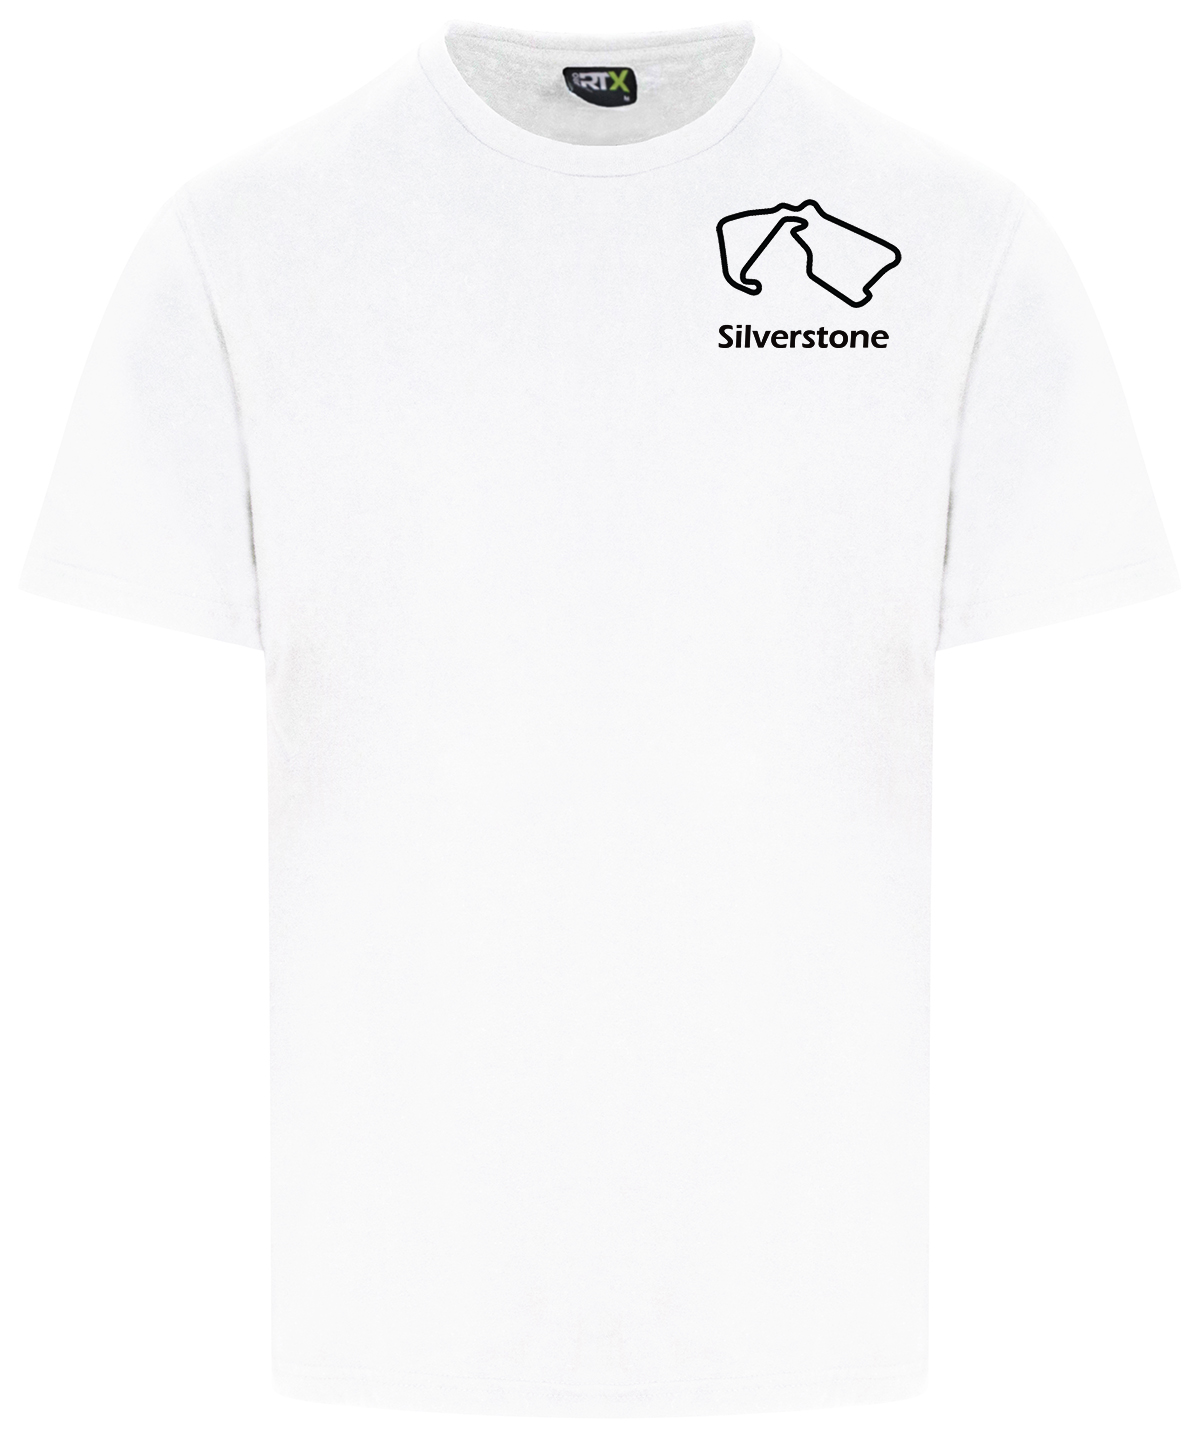 Silverstone T-Shirt